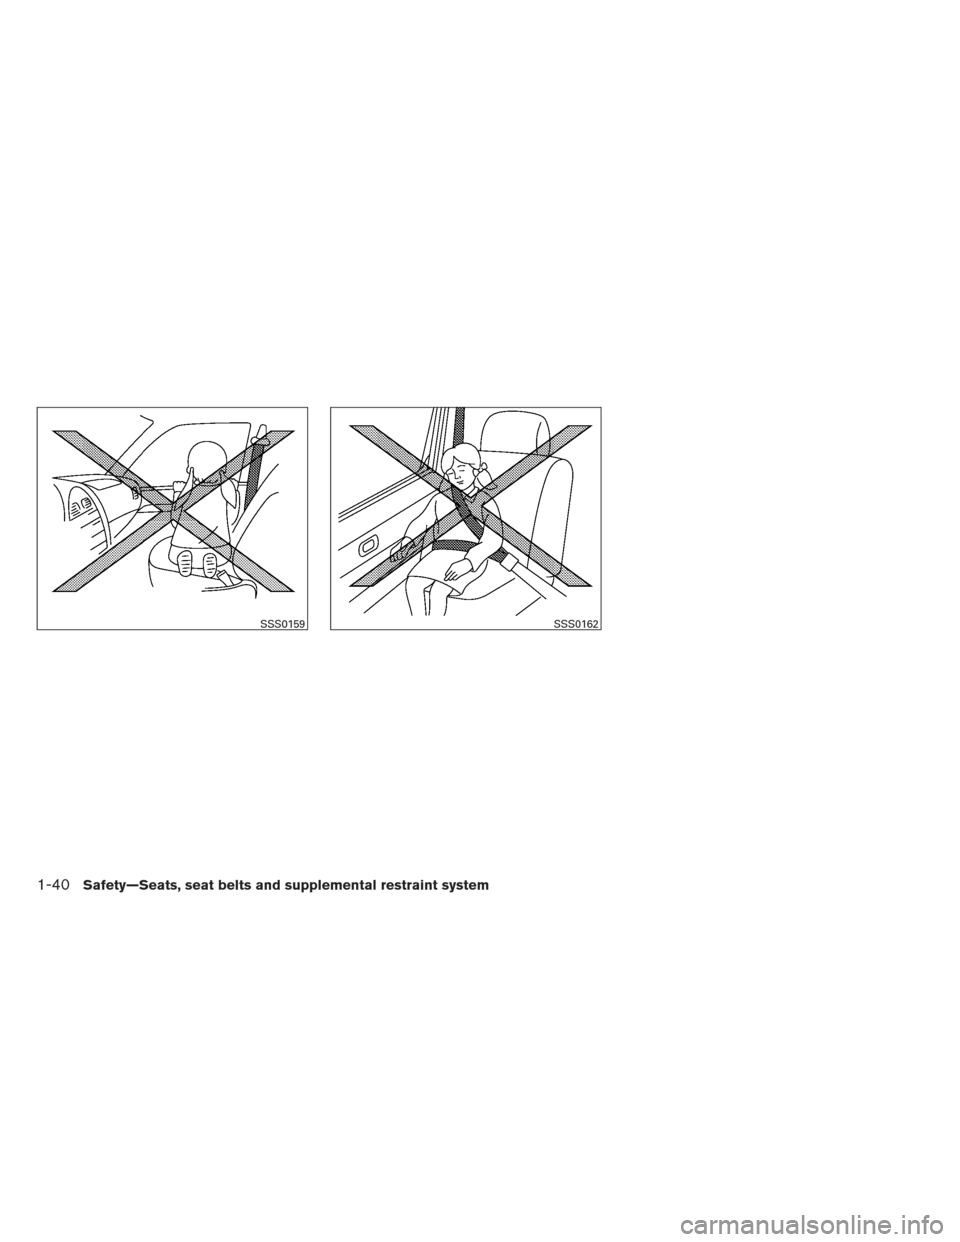 NISSAN SENTRA 2013 B17 / 7.G Workshop Manual SSS0159SSS0162
1-40Safety—Seats, seat belts and supplemental restraint system 